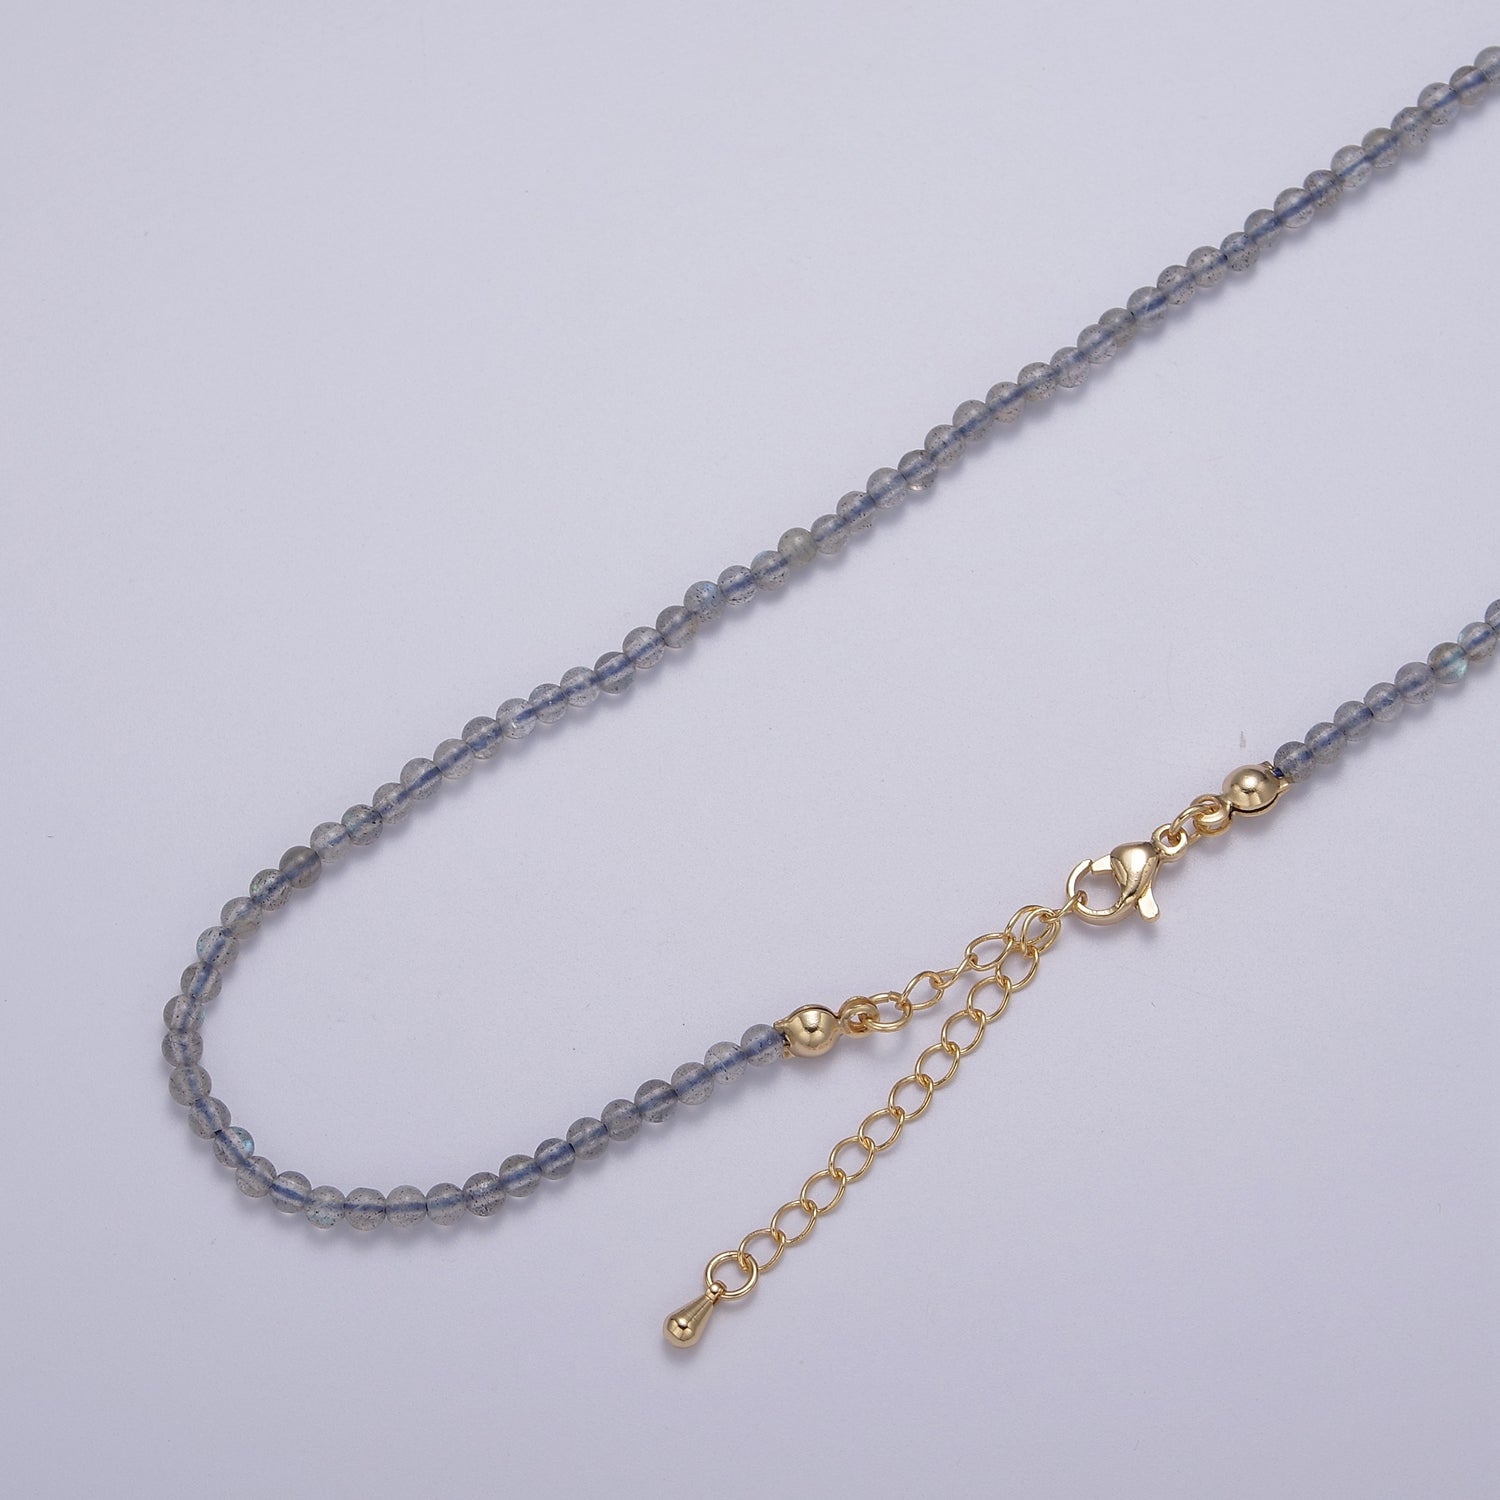 Moonstone Beaded Necklace 3.2mm Rainbow Moonstone Beads Necklace, Dainty Handmade Necklace WA-868 - DLUXCA